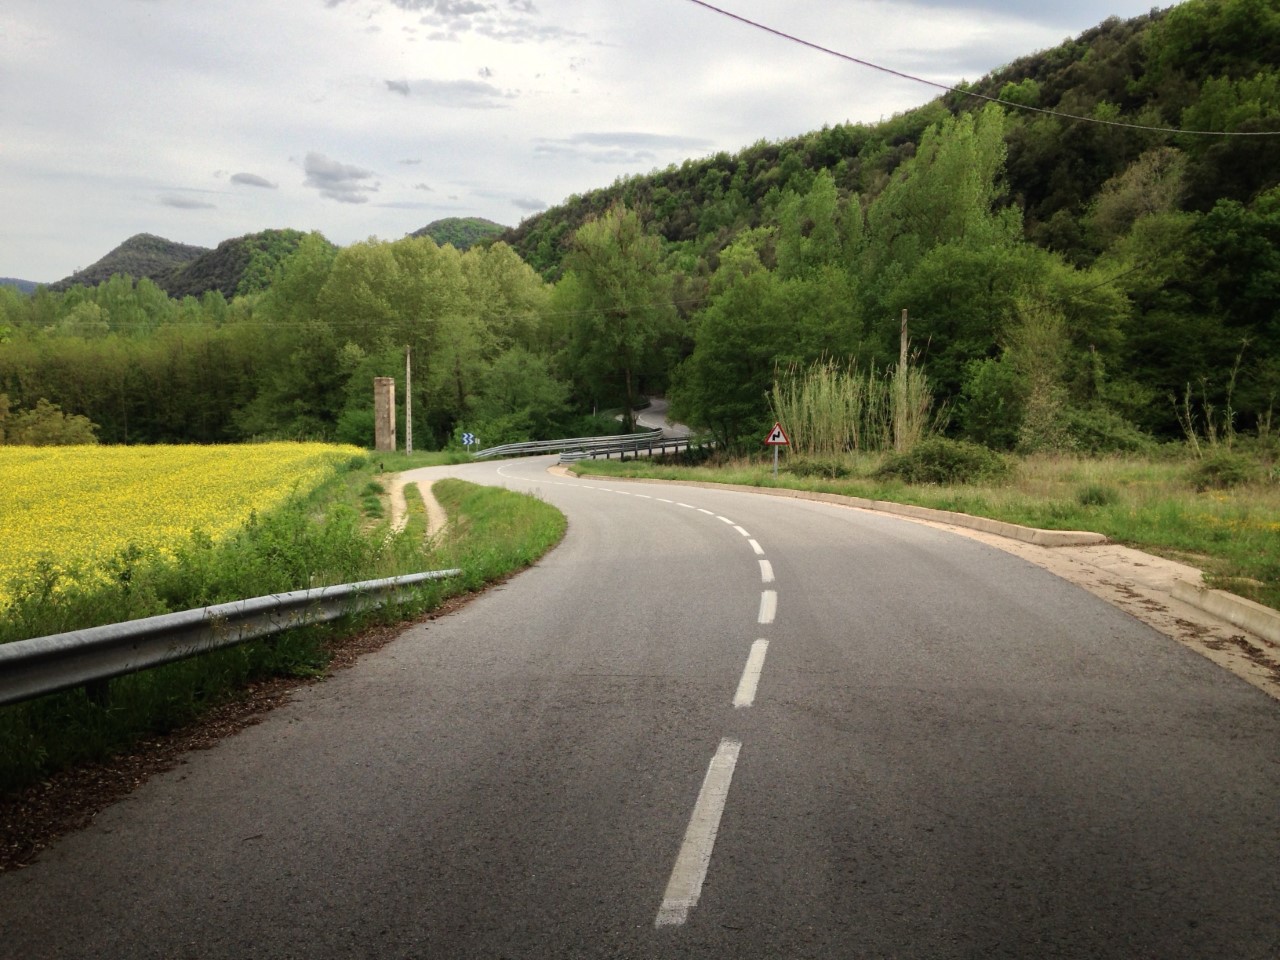 empty road through some trees